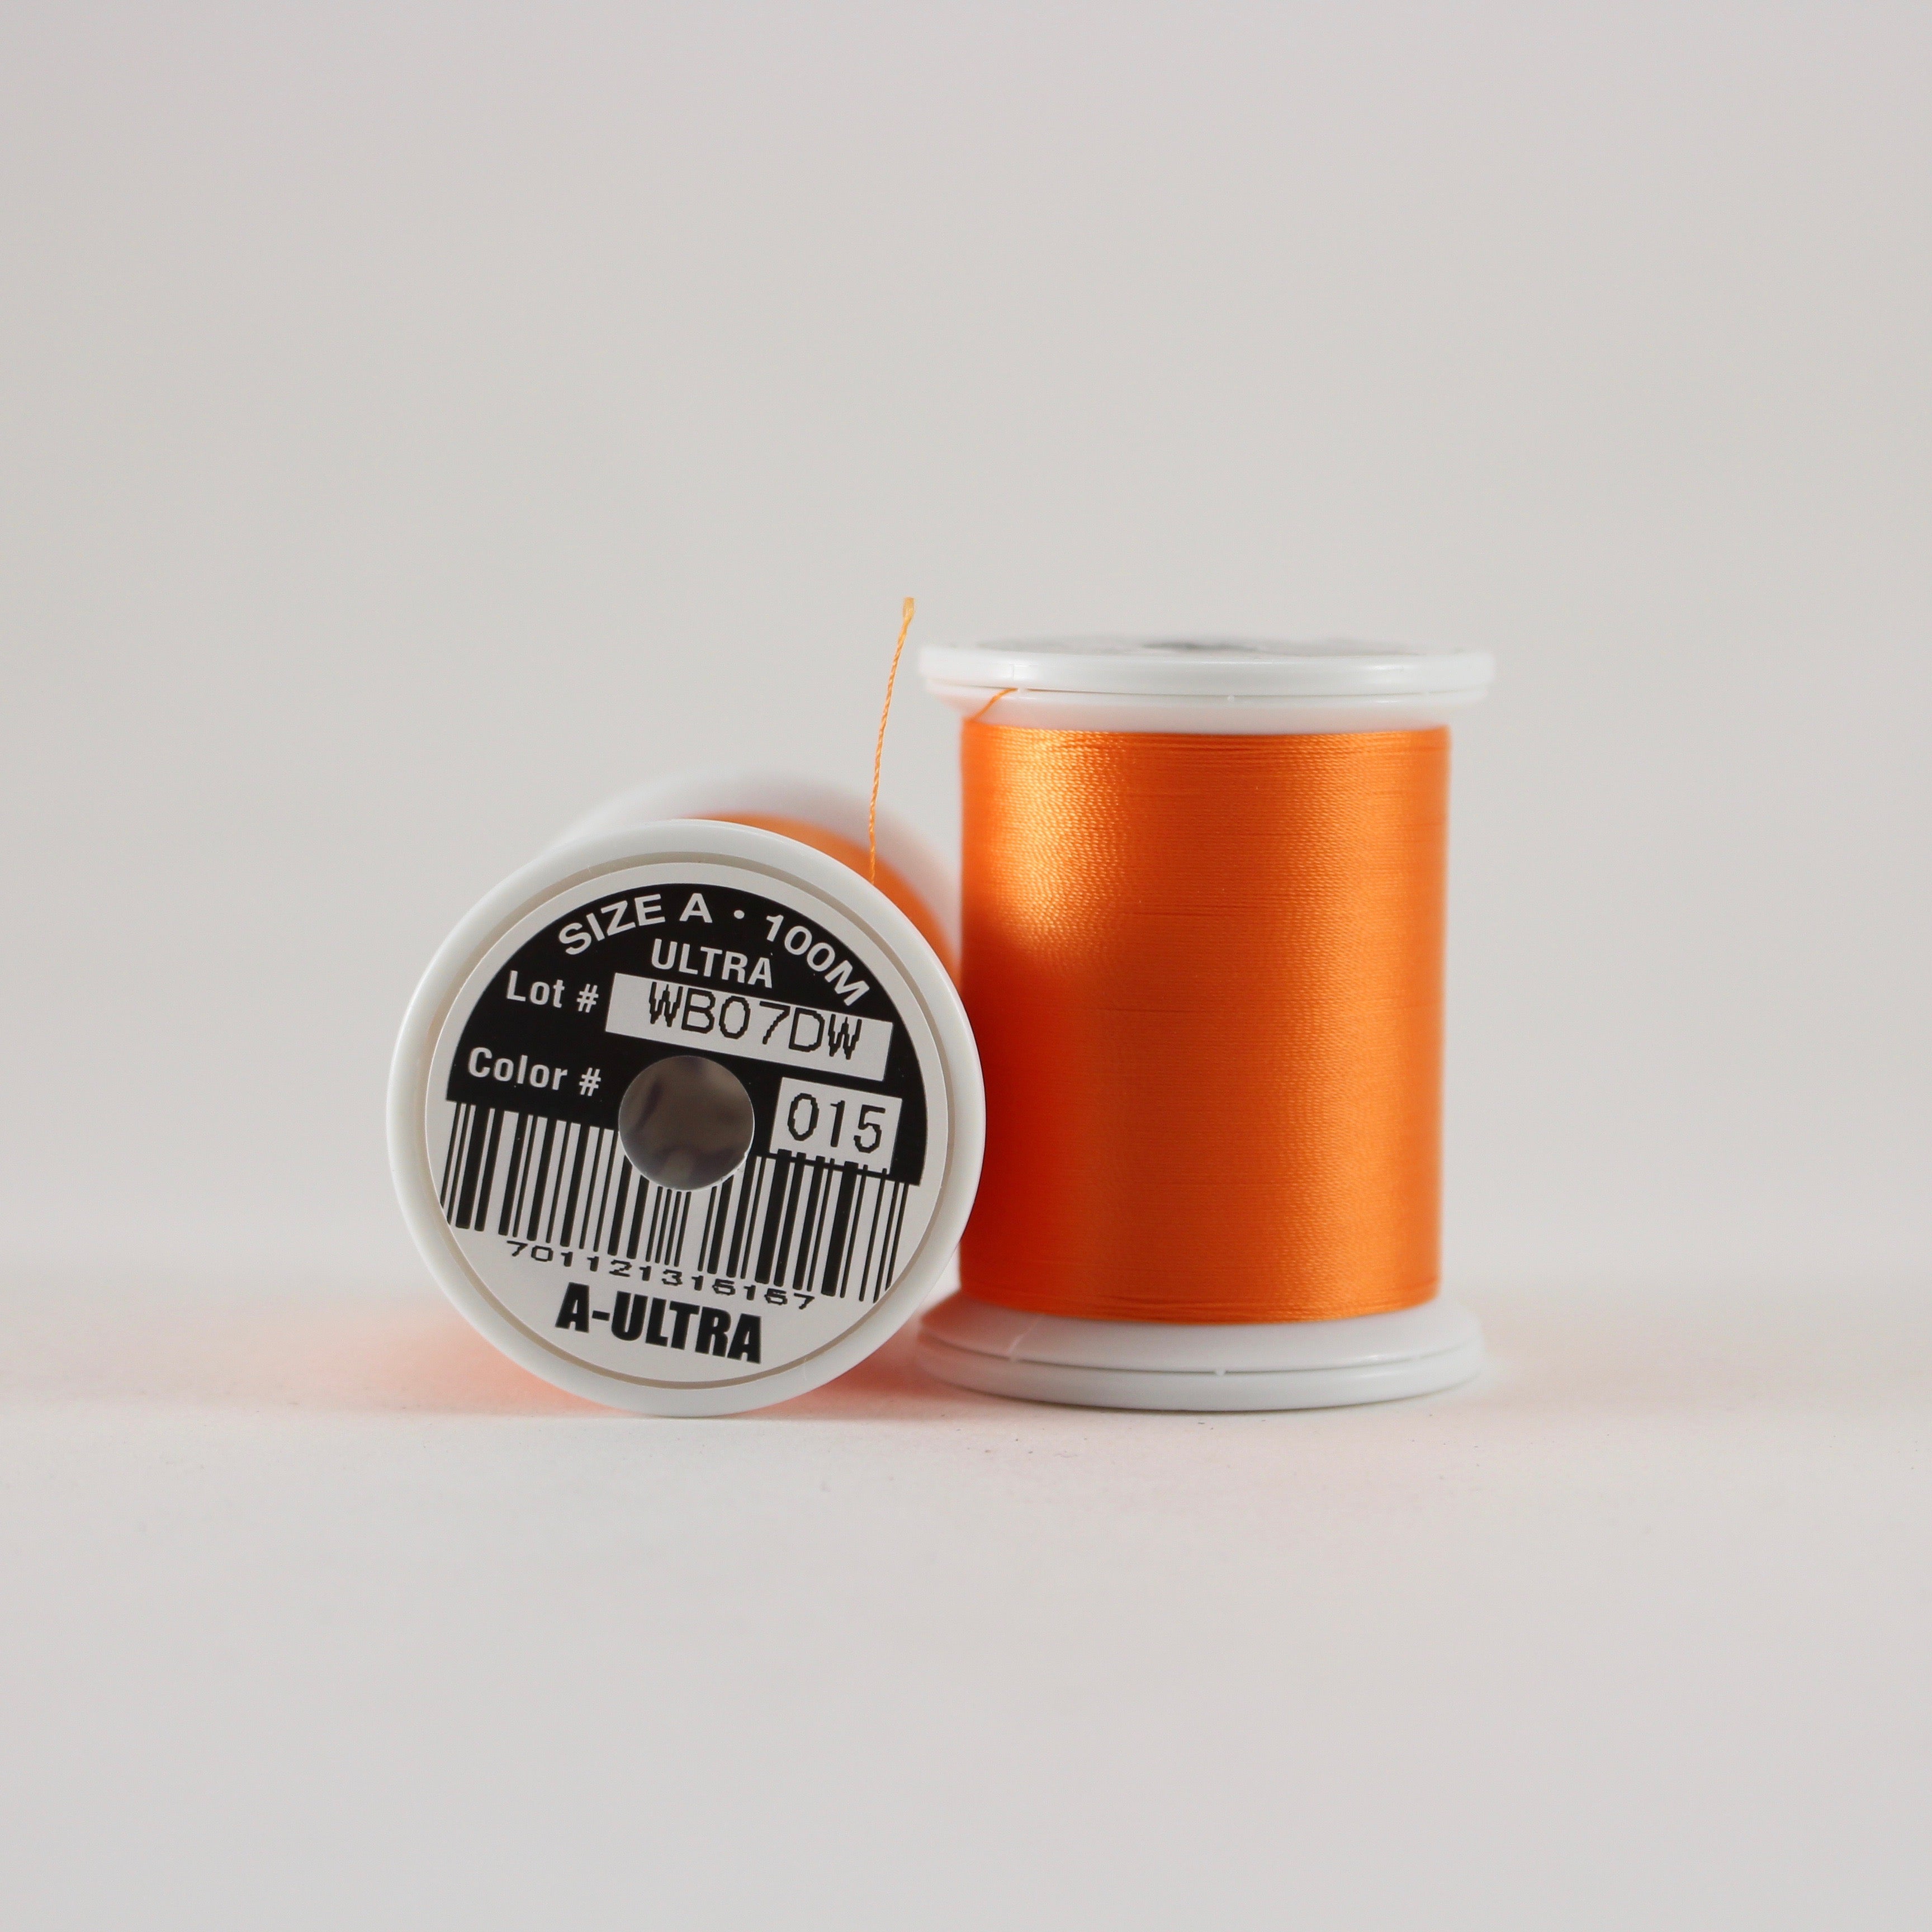 Fuji Ultra Poly rod wrapping thread in Orange #015 (Size A 100m